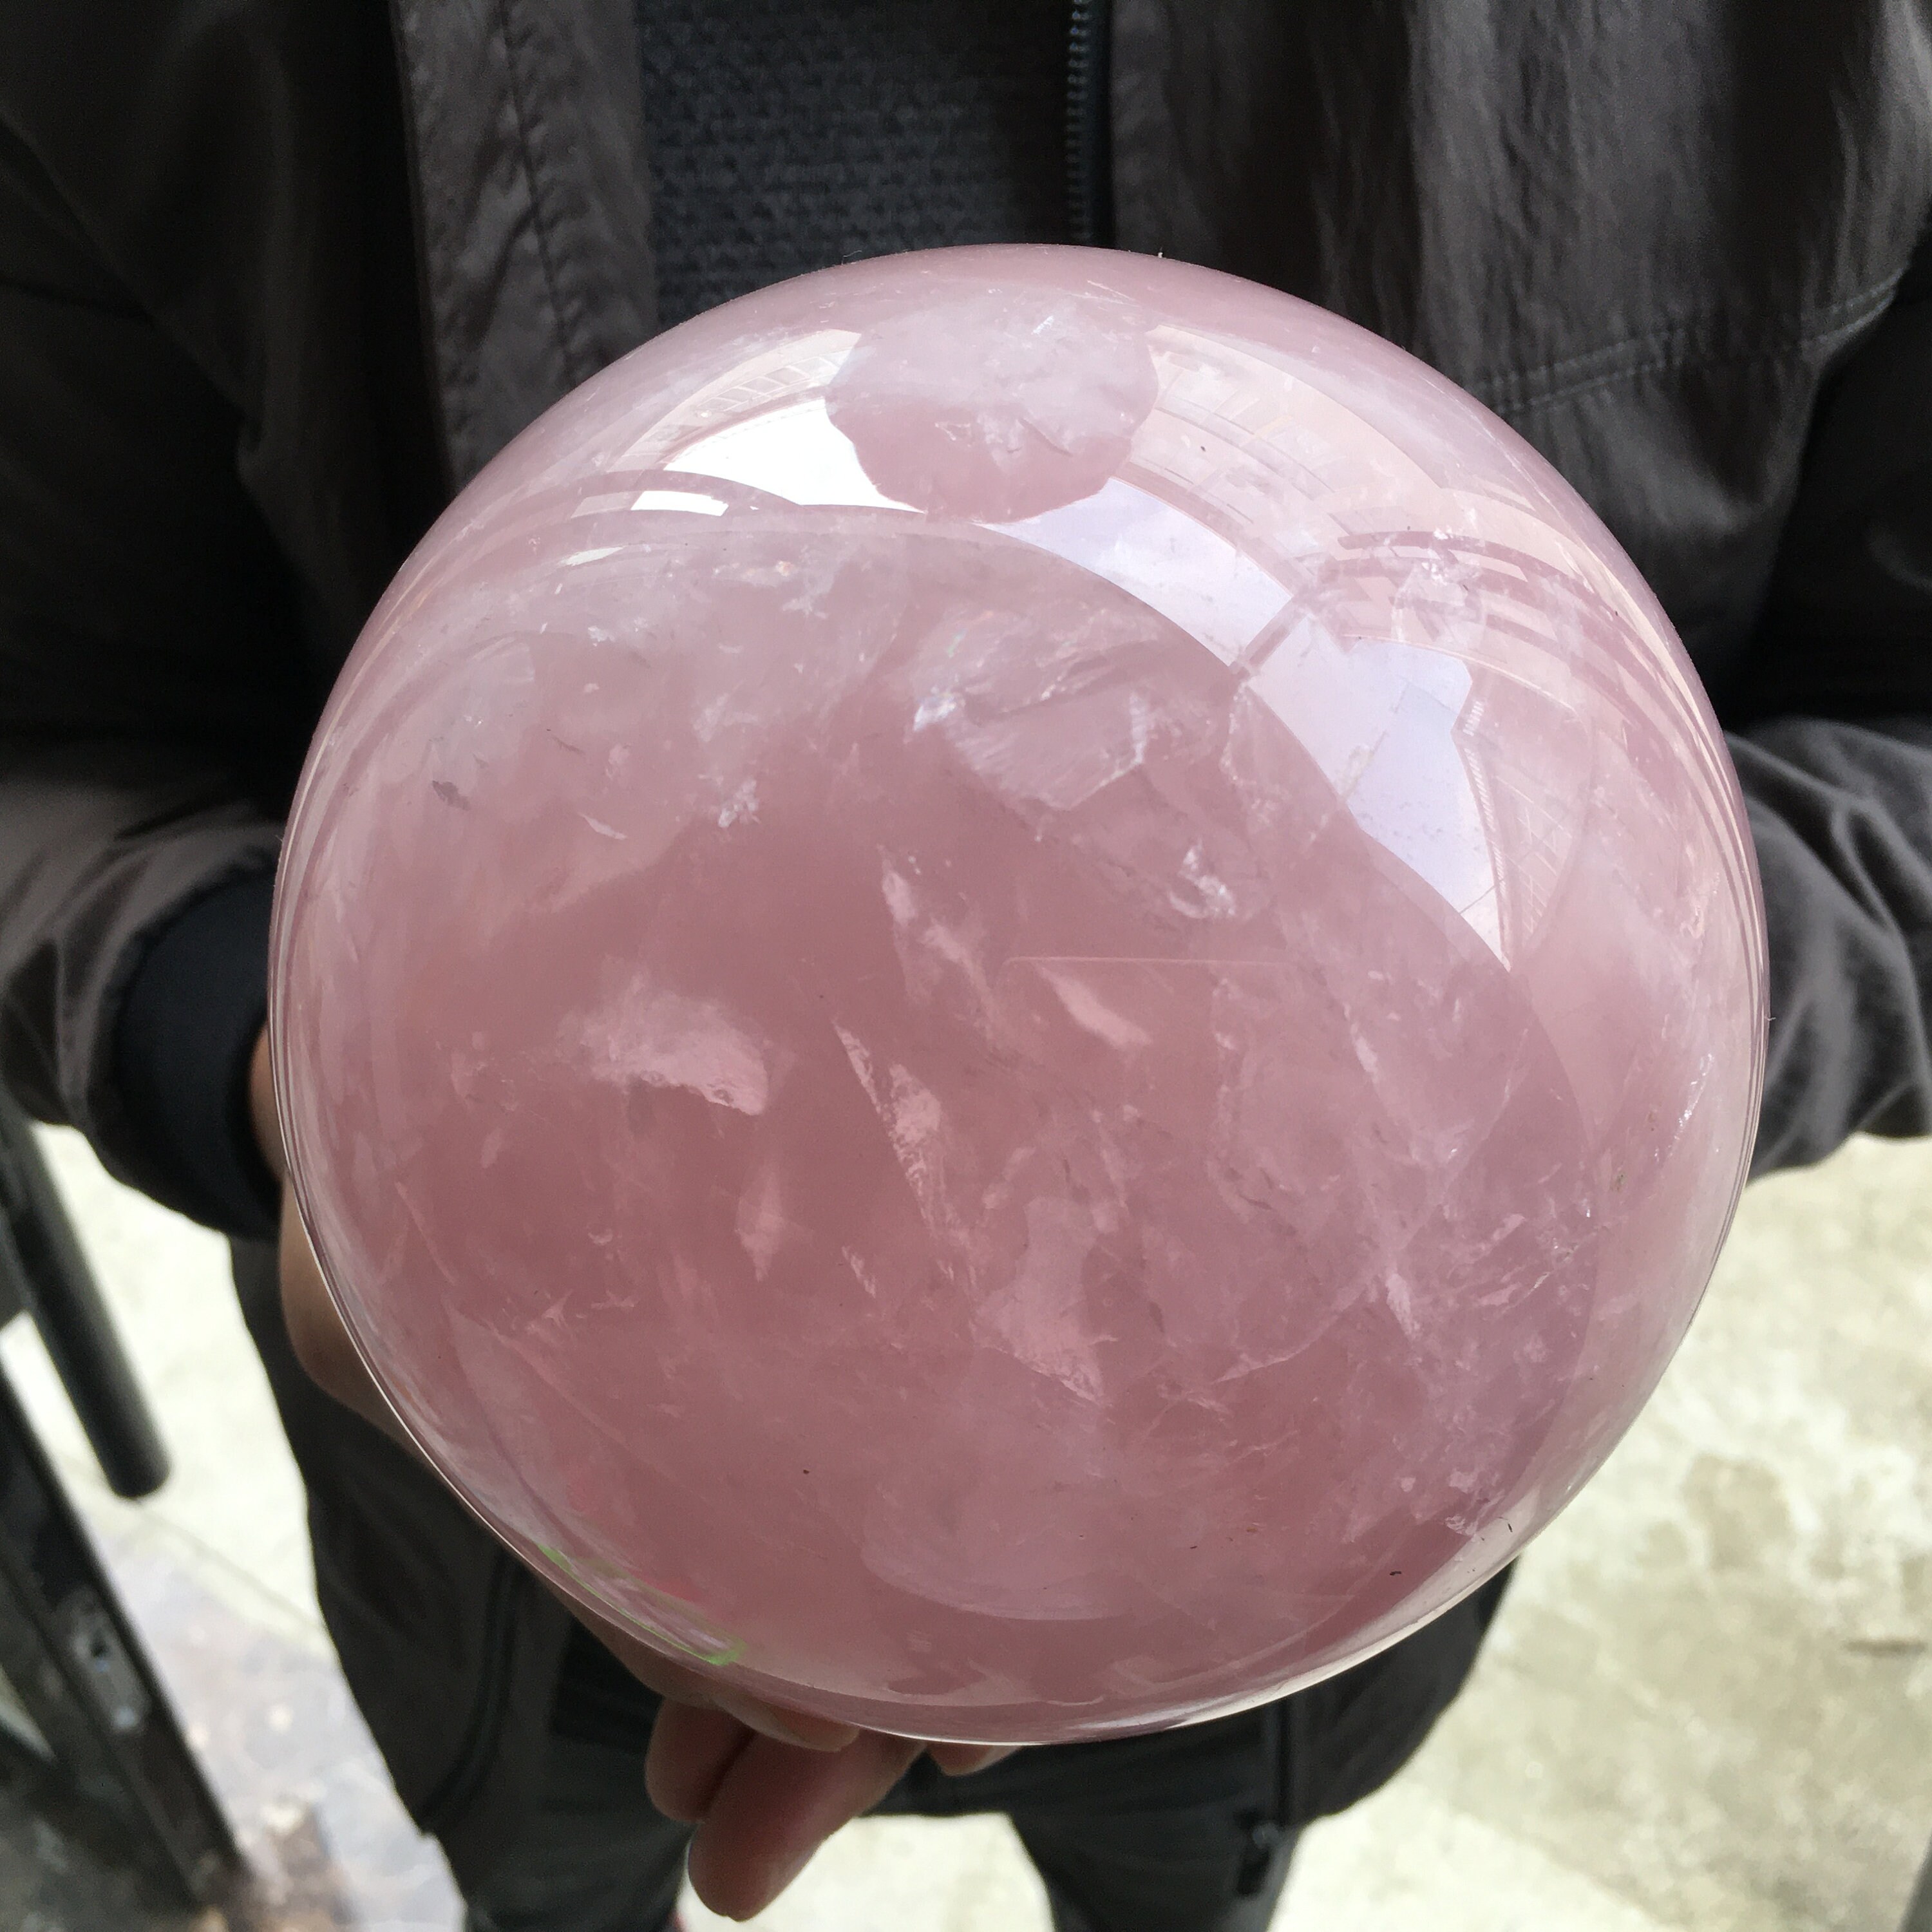 Hztyyier Natural Crystal Ball Crystal Healing Ball Pink Rose Quartz Stone Sphere Decorative Ball Yoga Balancing Reiki 